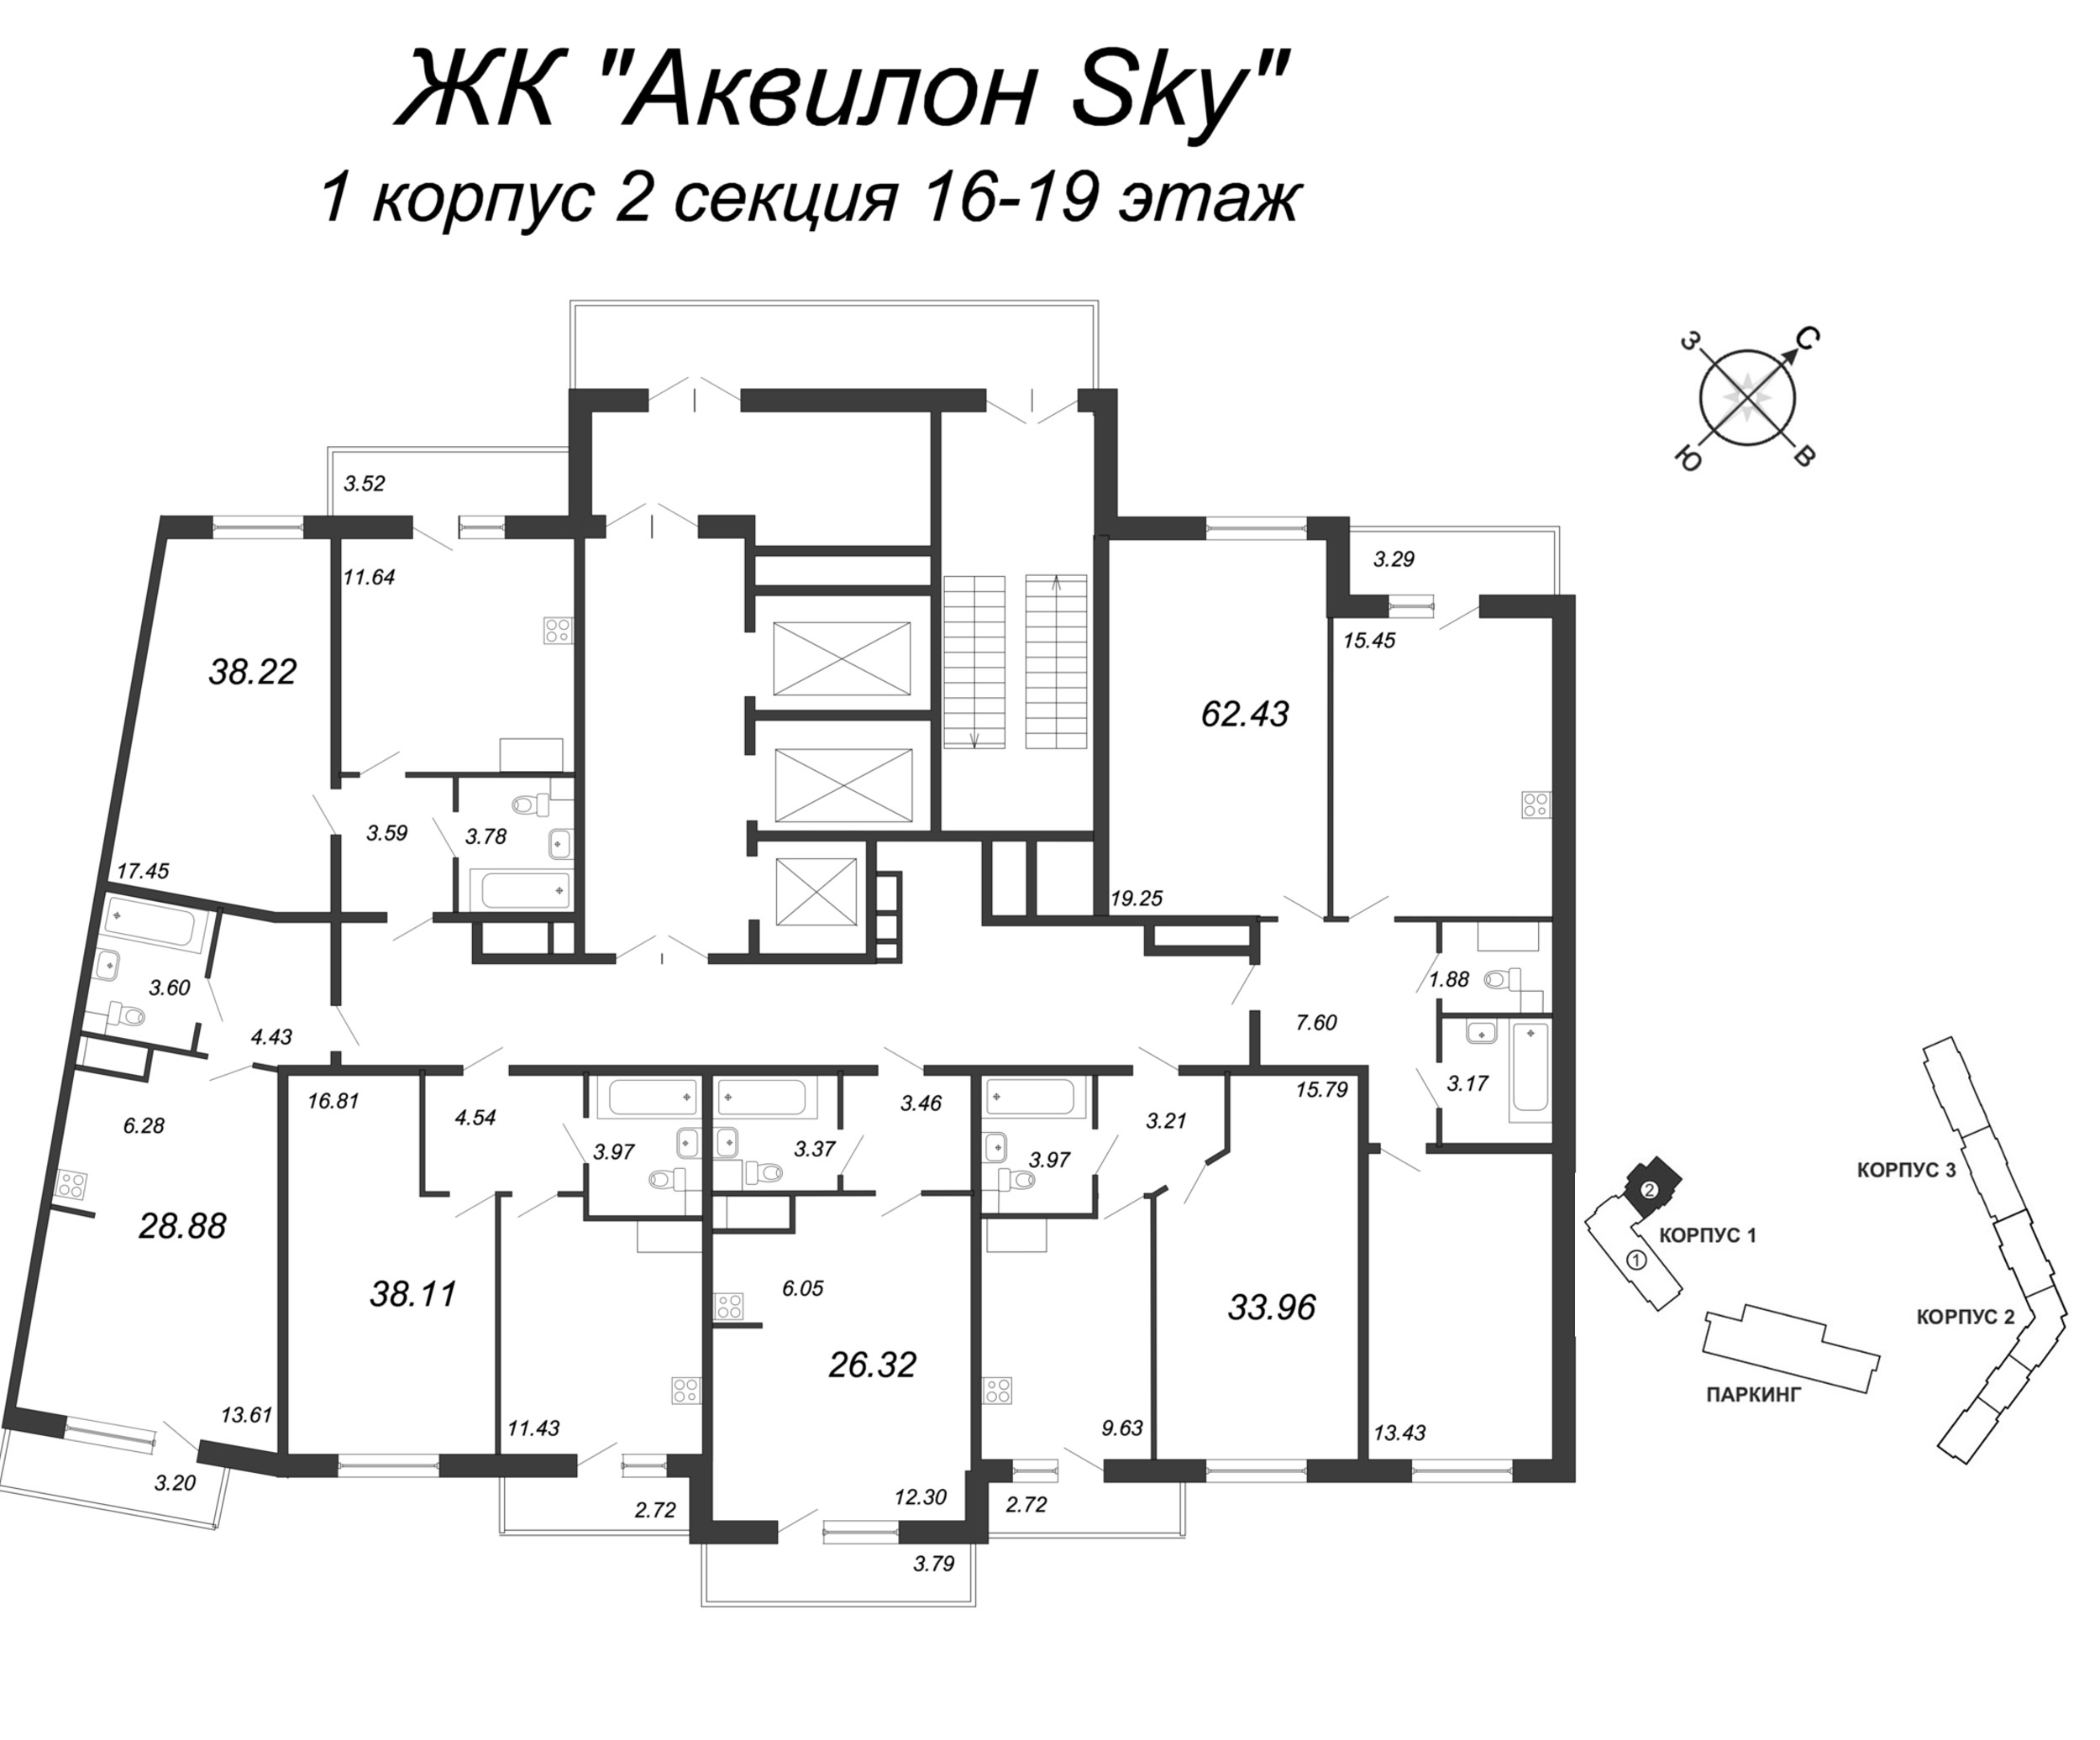 3-комнатная (Евро) квартира, 62.43 м² - планировка этажа